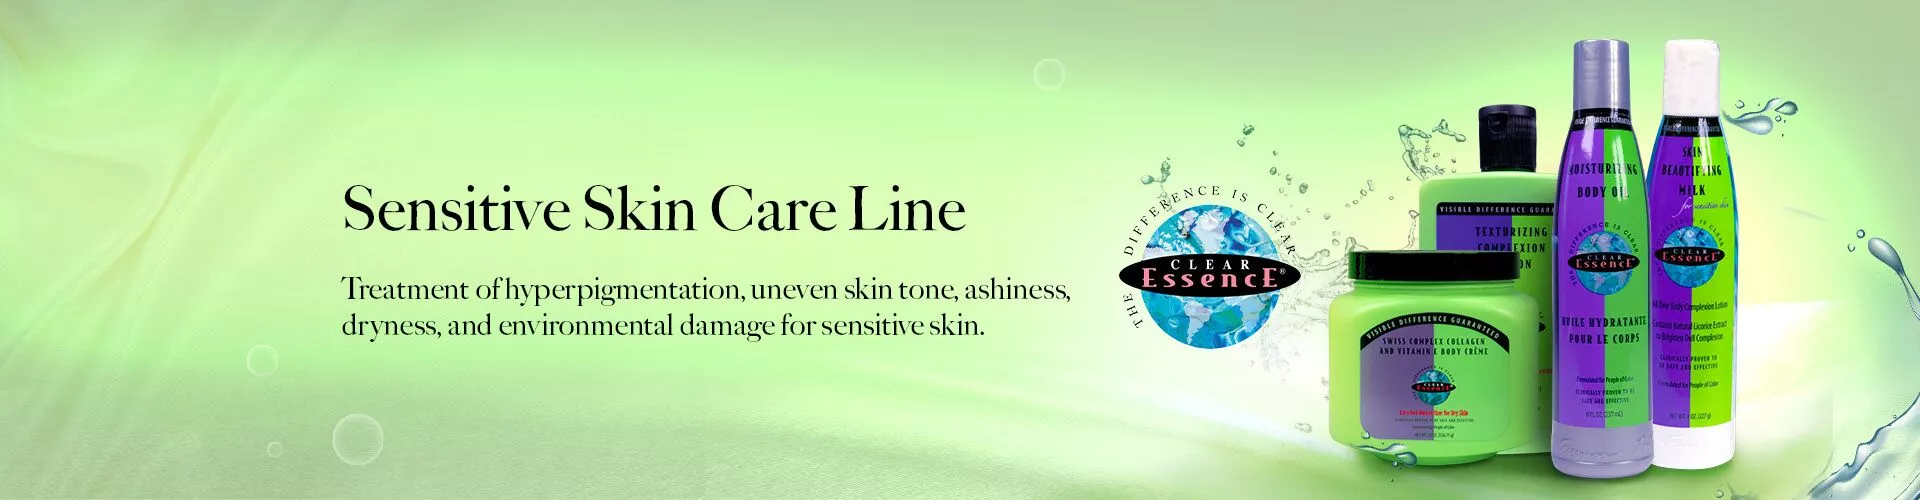 Sensitive Skin Care Line